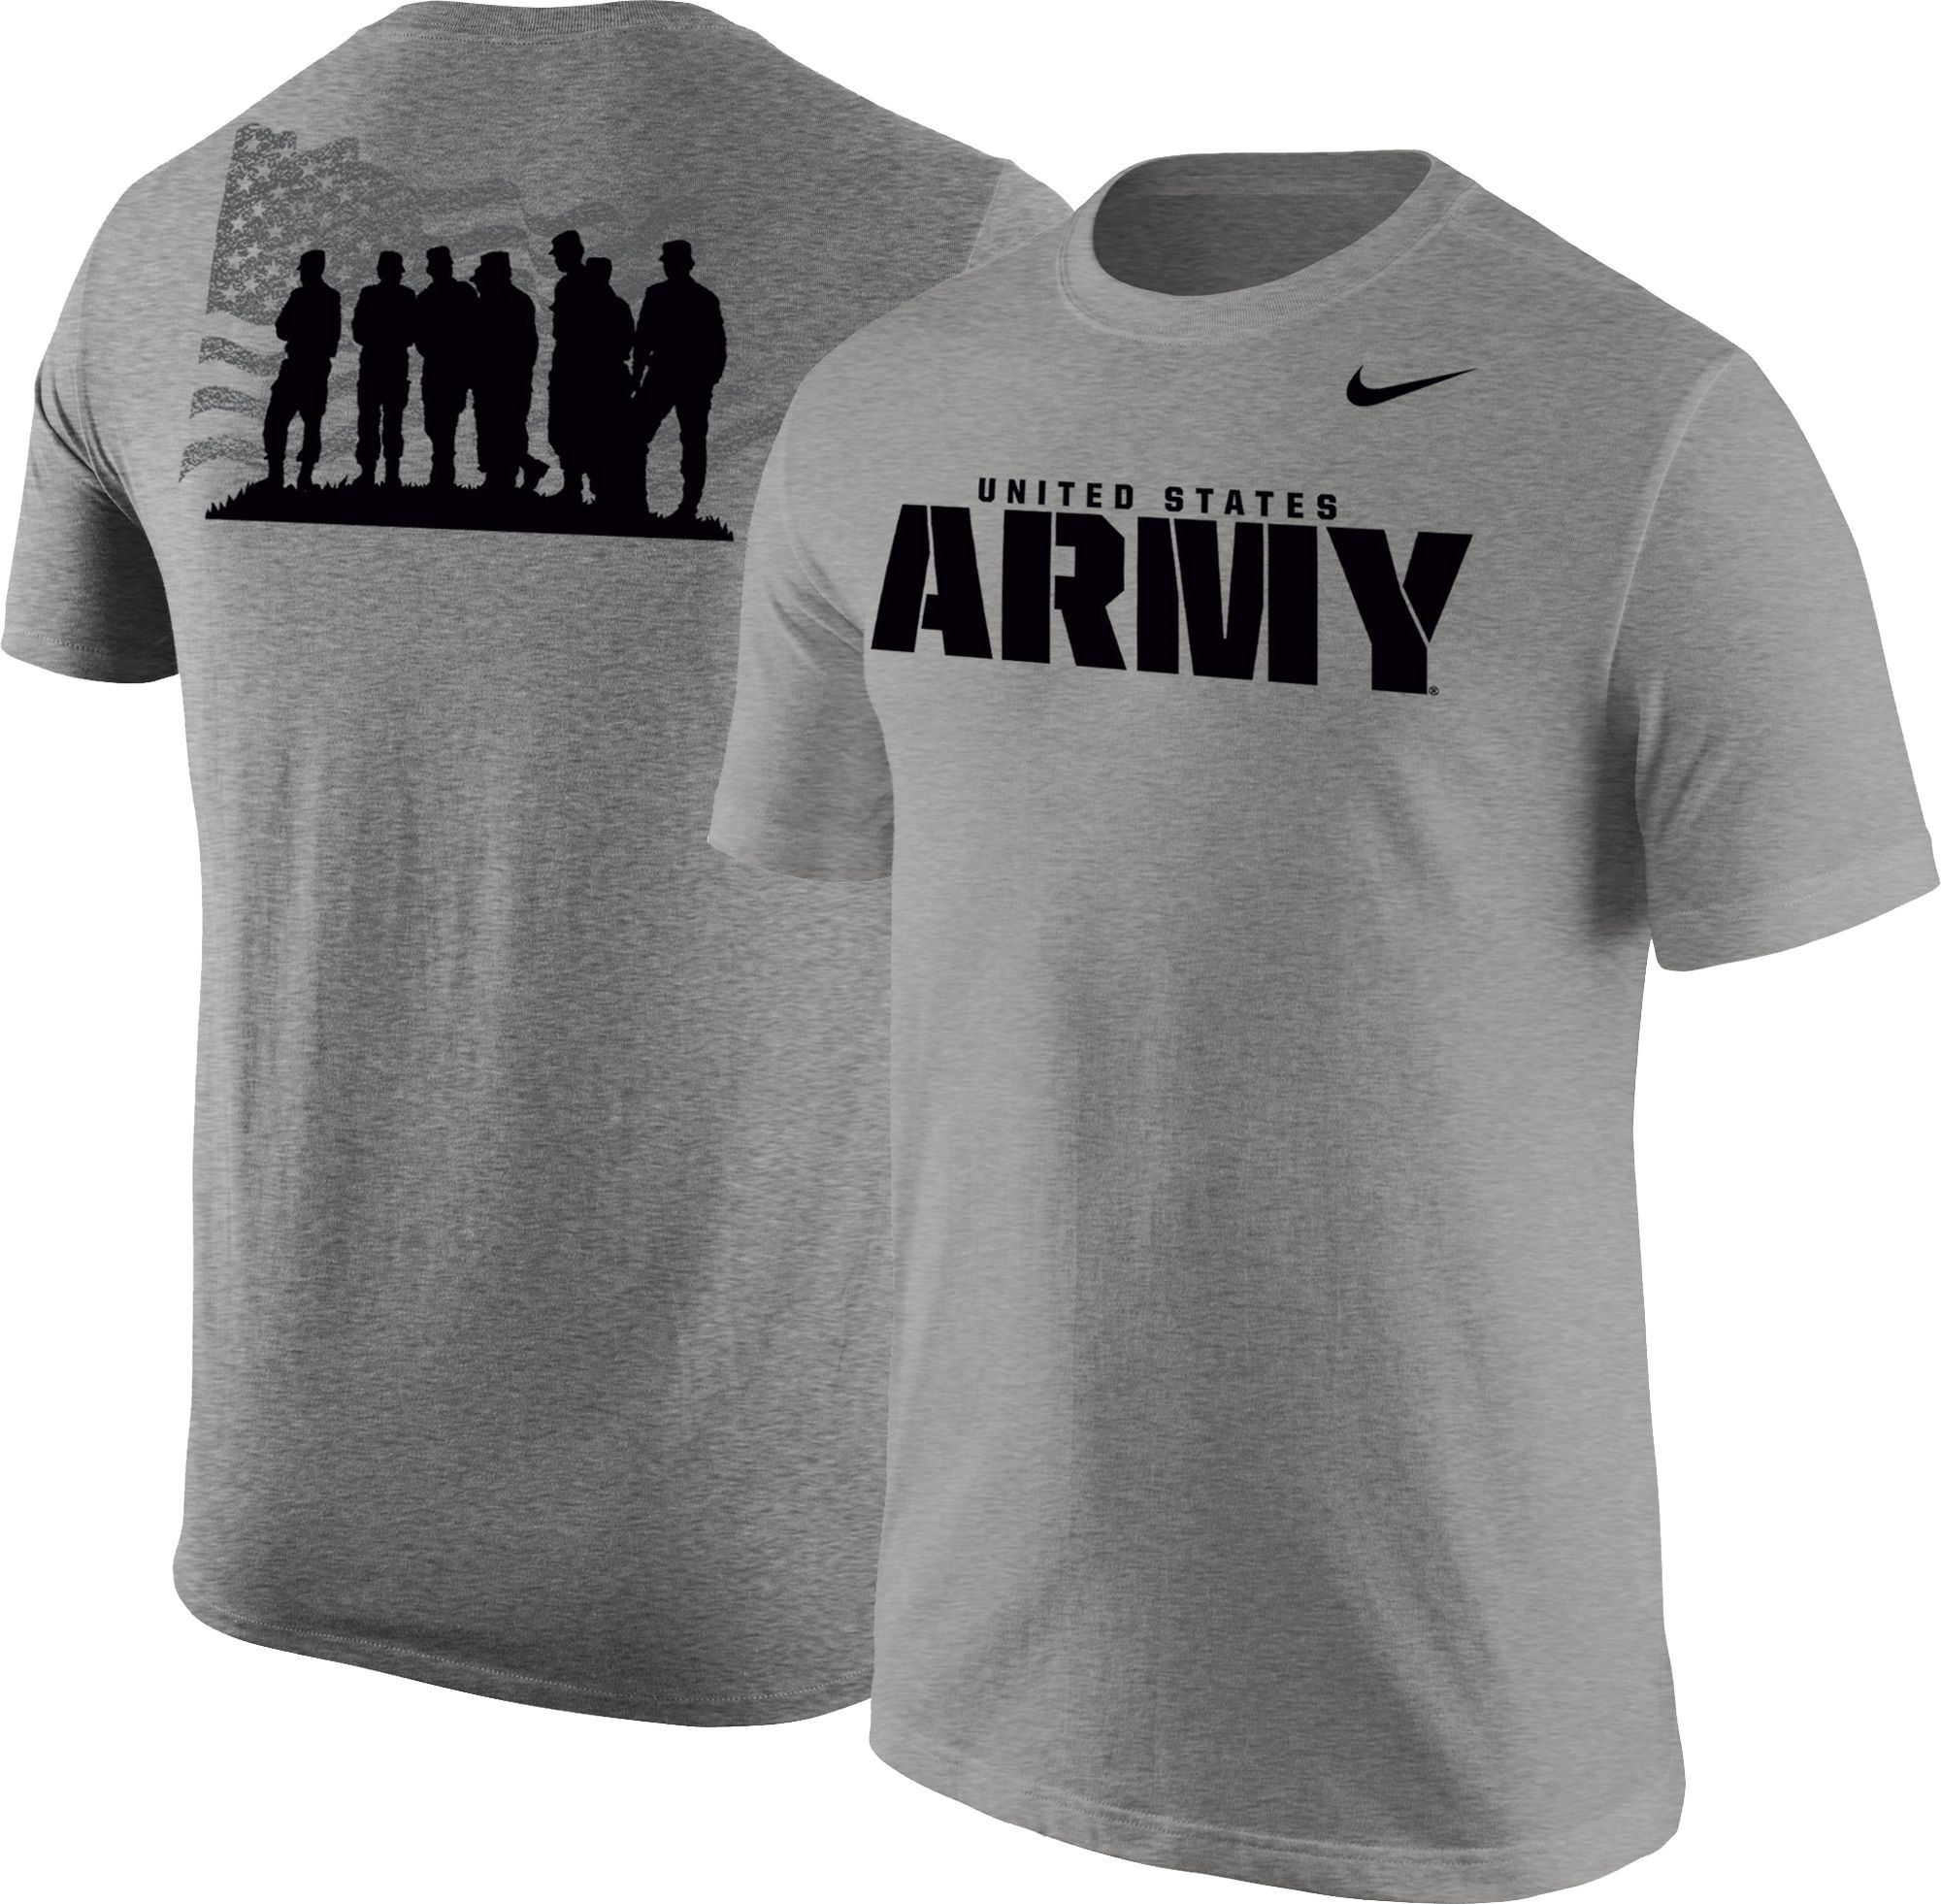 us army nike apparel